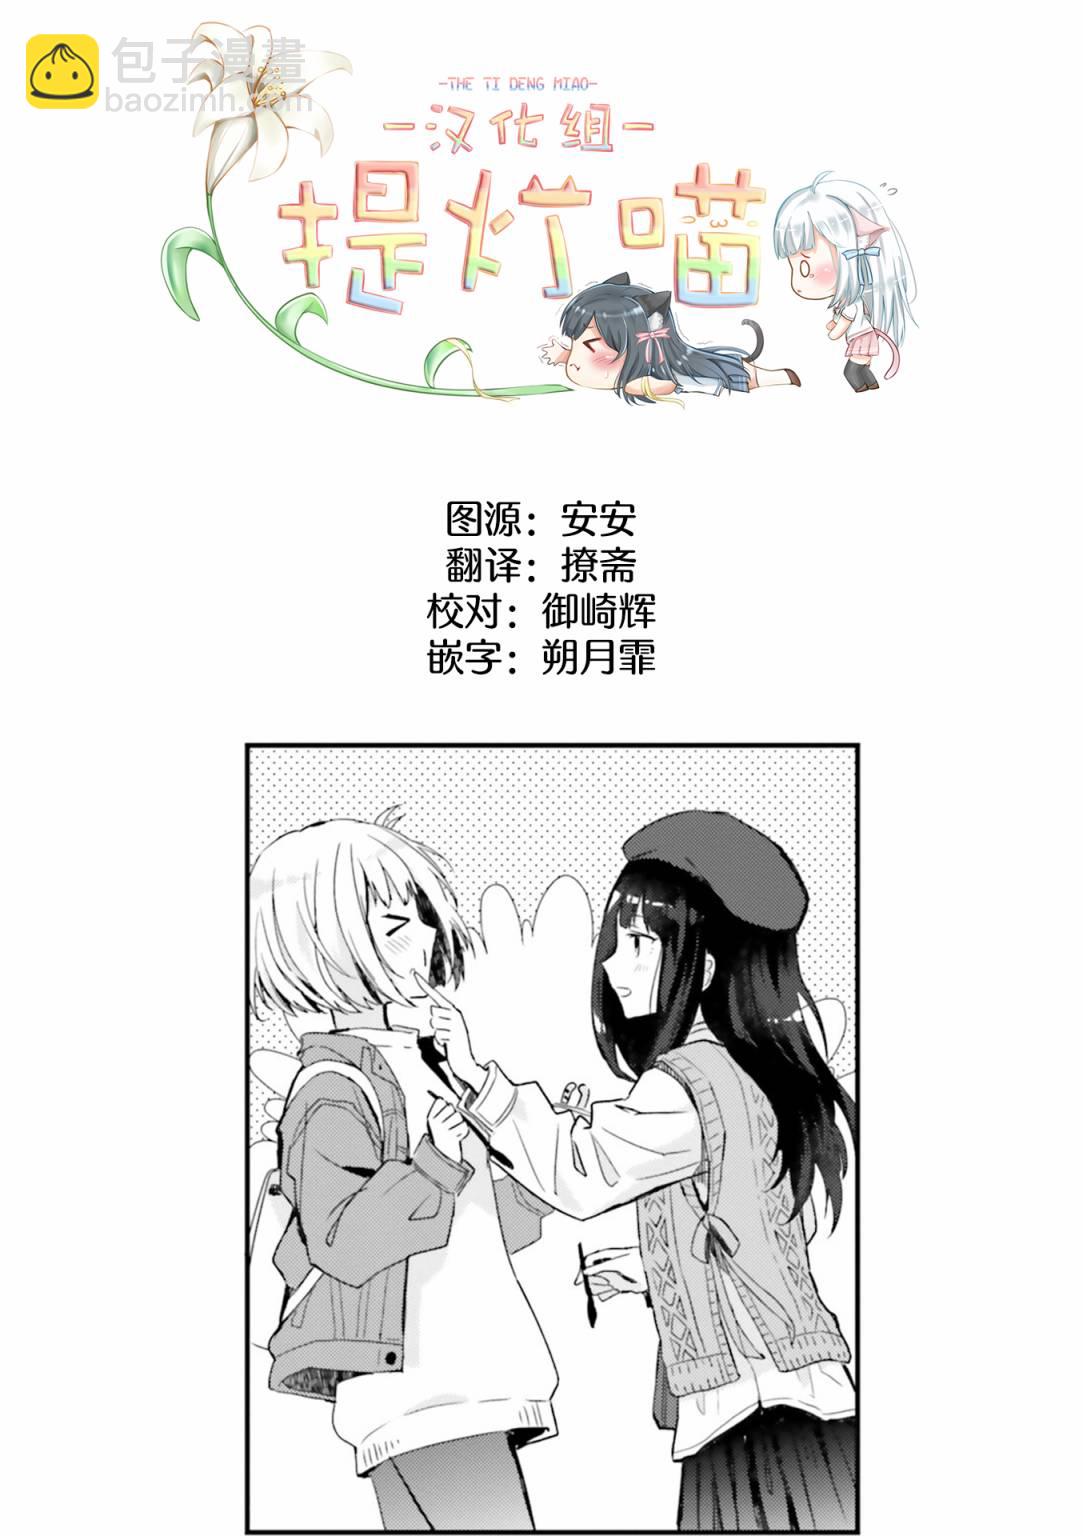 莉可麗絲官方漫畫短篇集REPEAT2 - repeat05 - 3